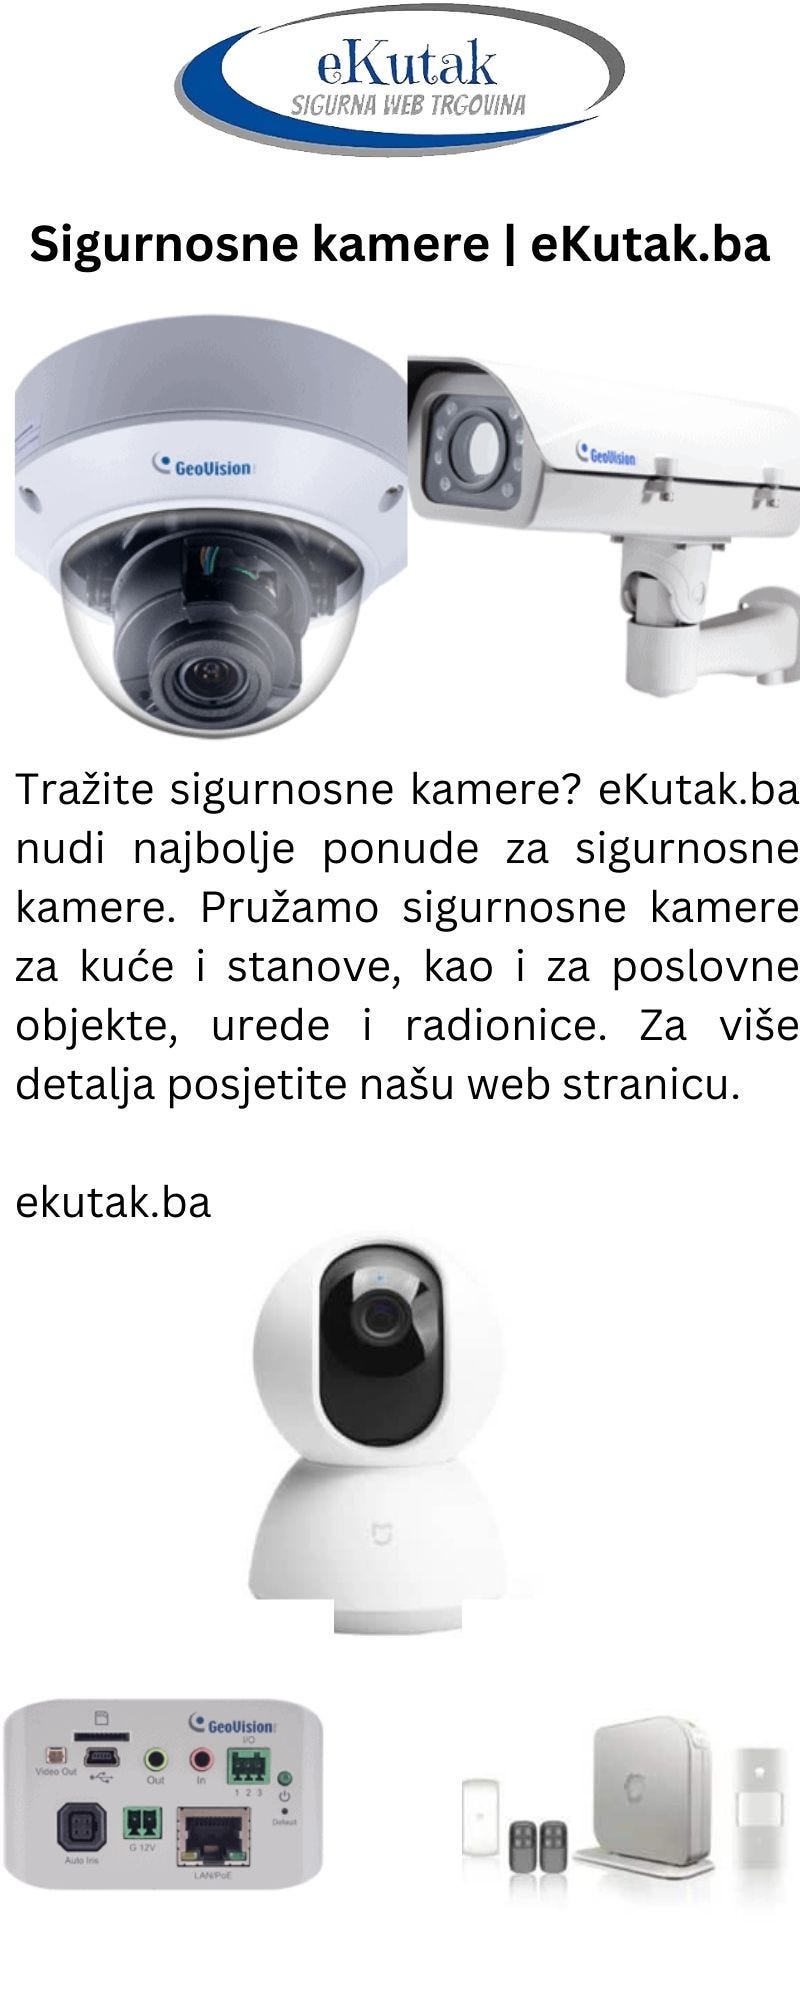 Sigurnosne kamere | eKutak.ba - Ekutak - Medium